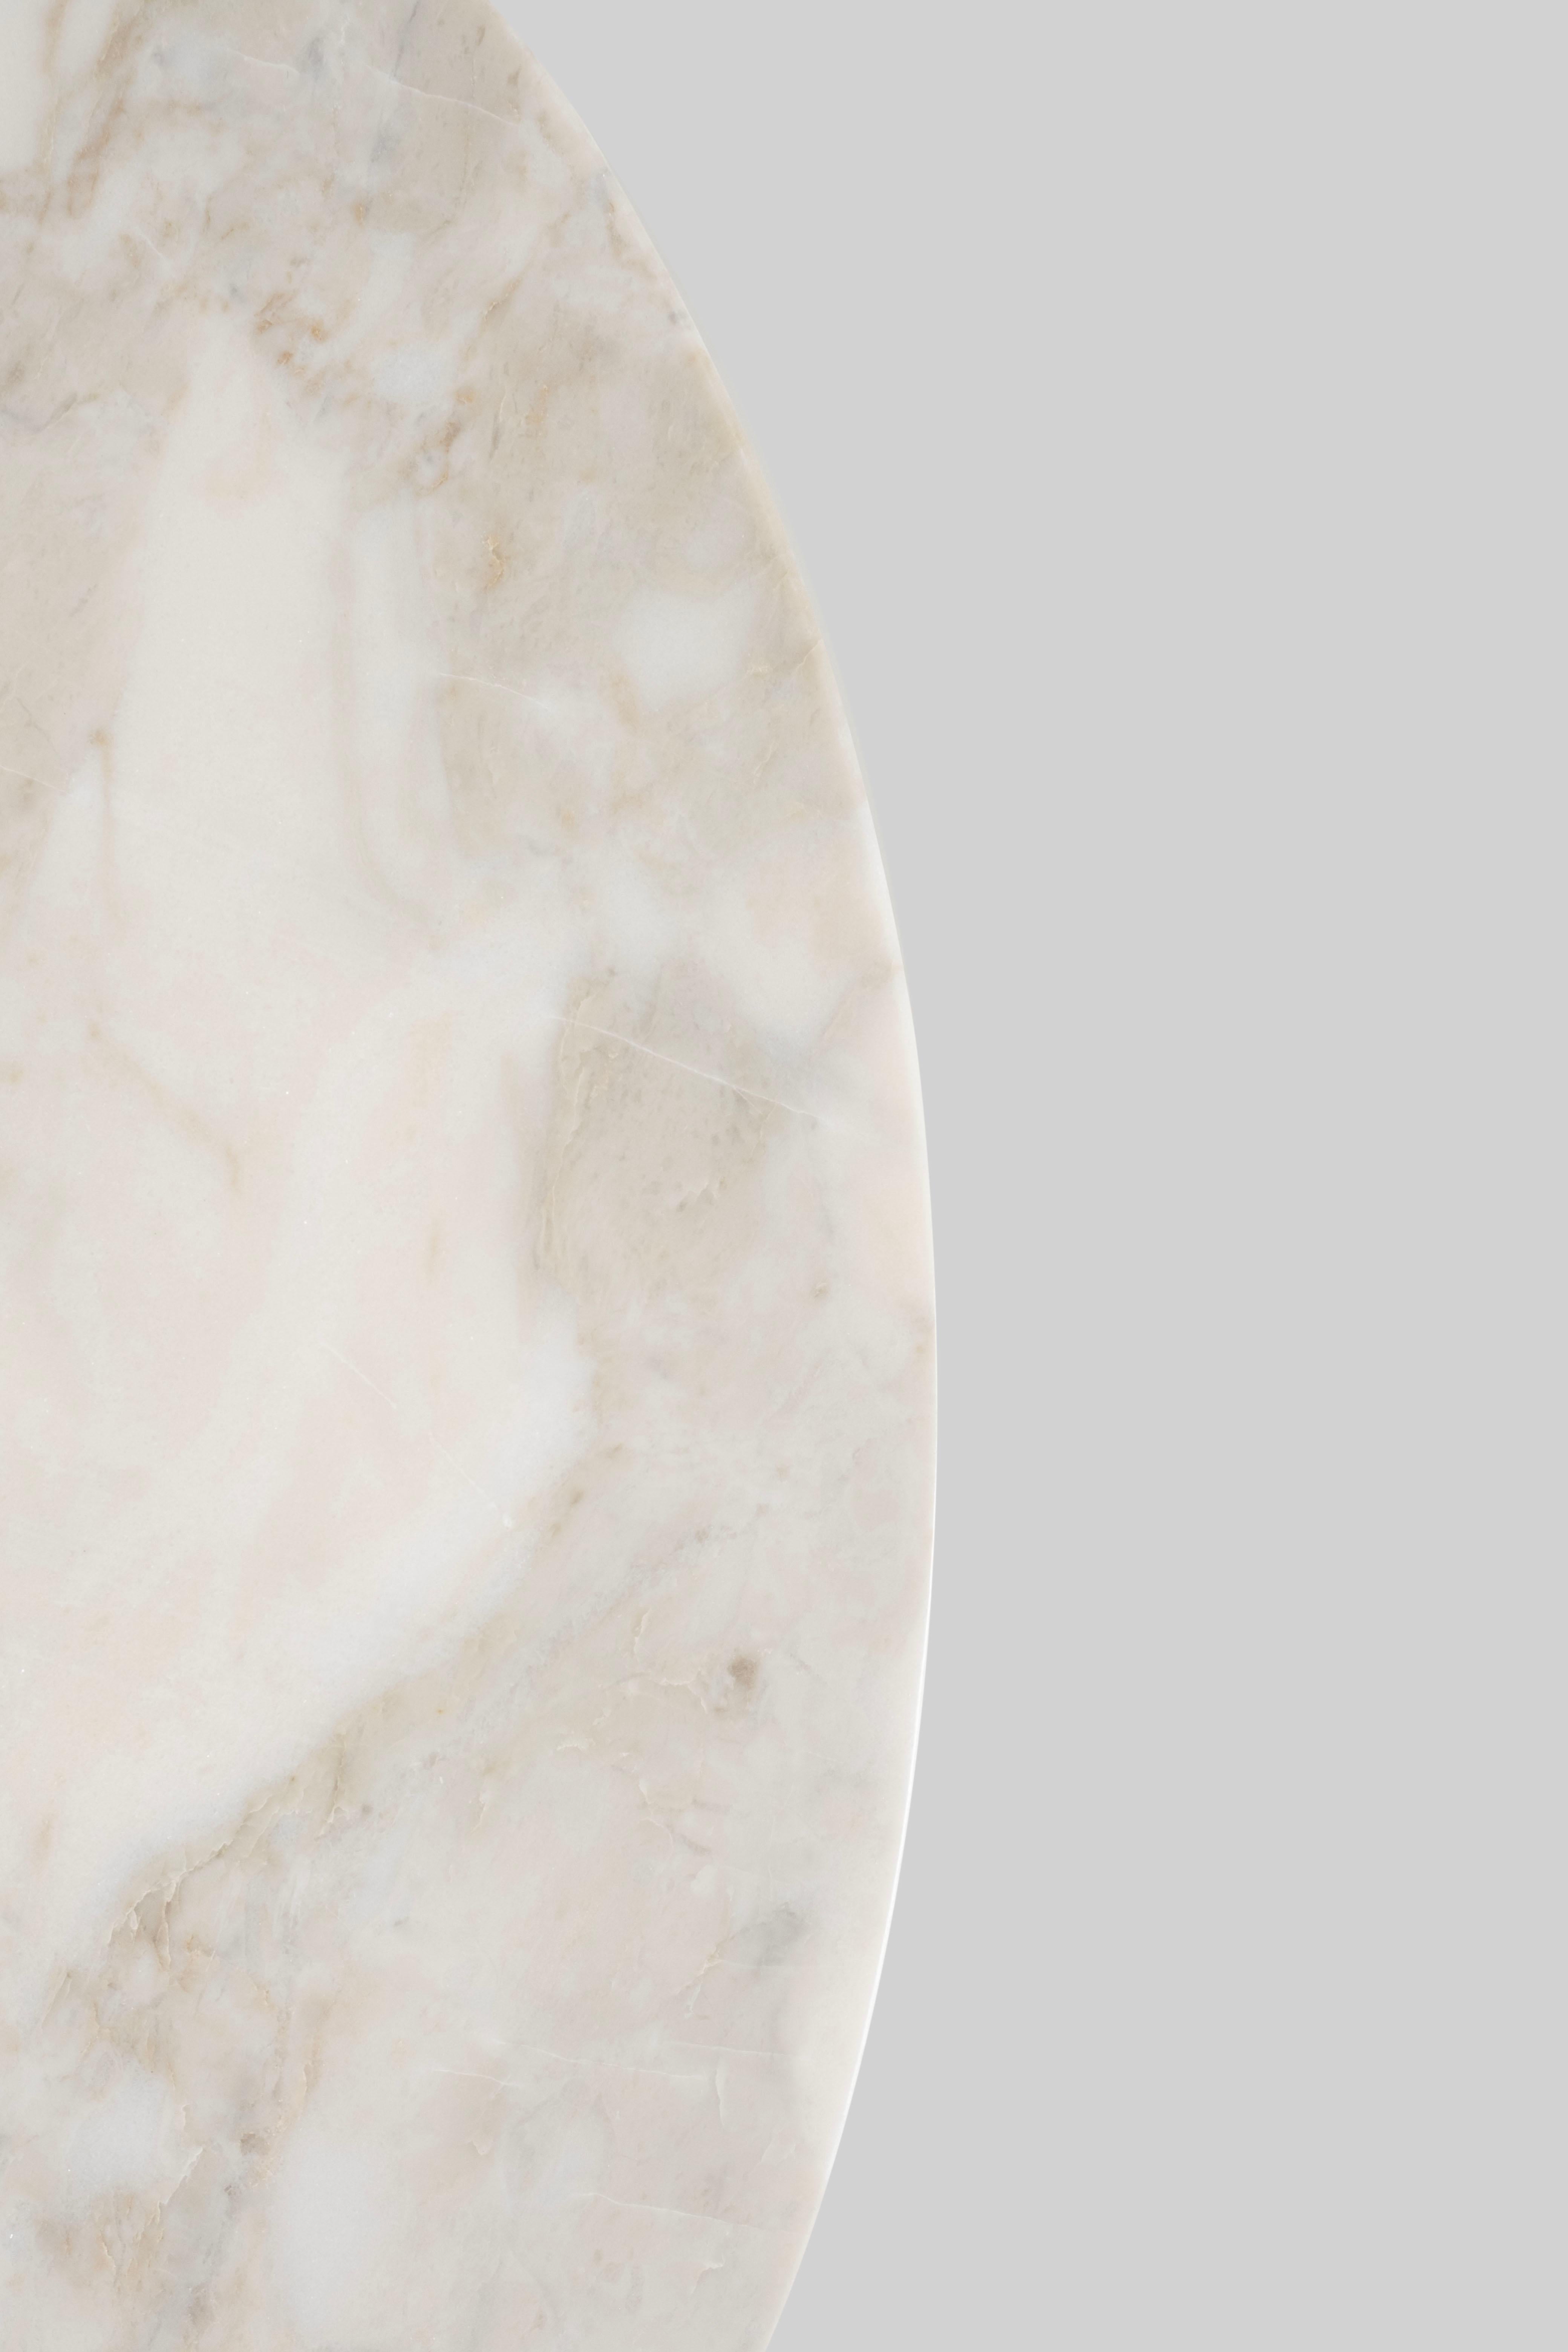 Modern Landscape Side Tables Calacatta Oro Marble Handmade Portugal Greenapple For Sale 7